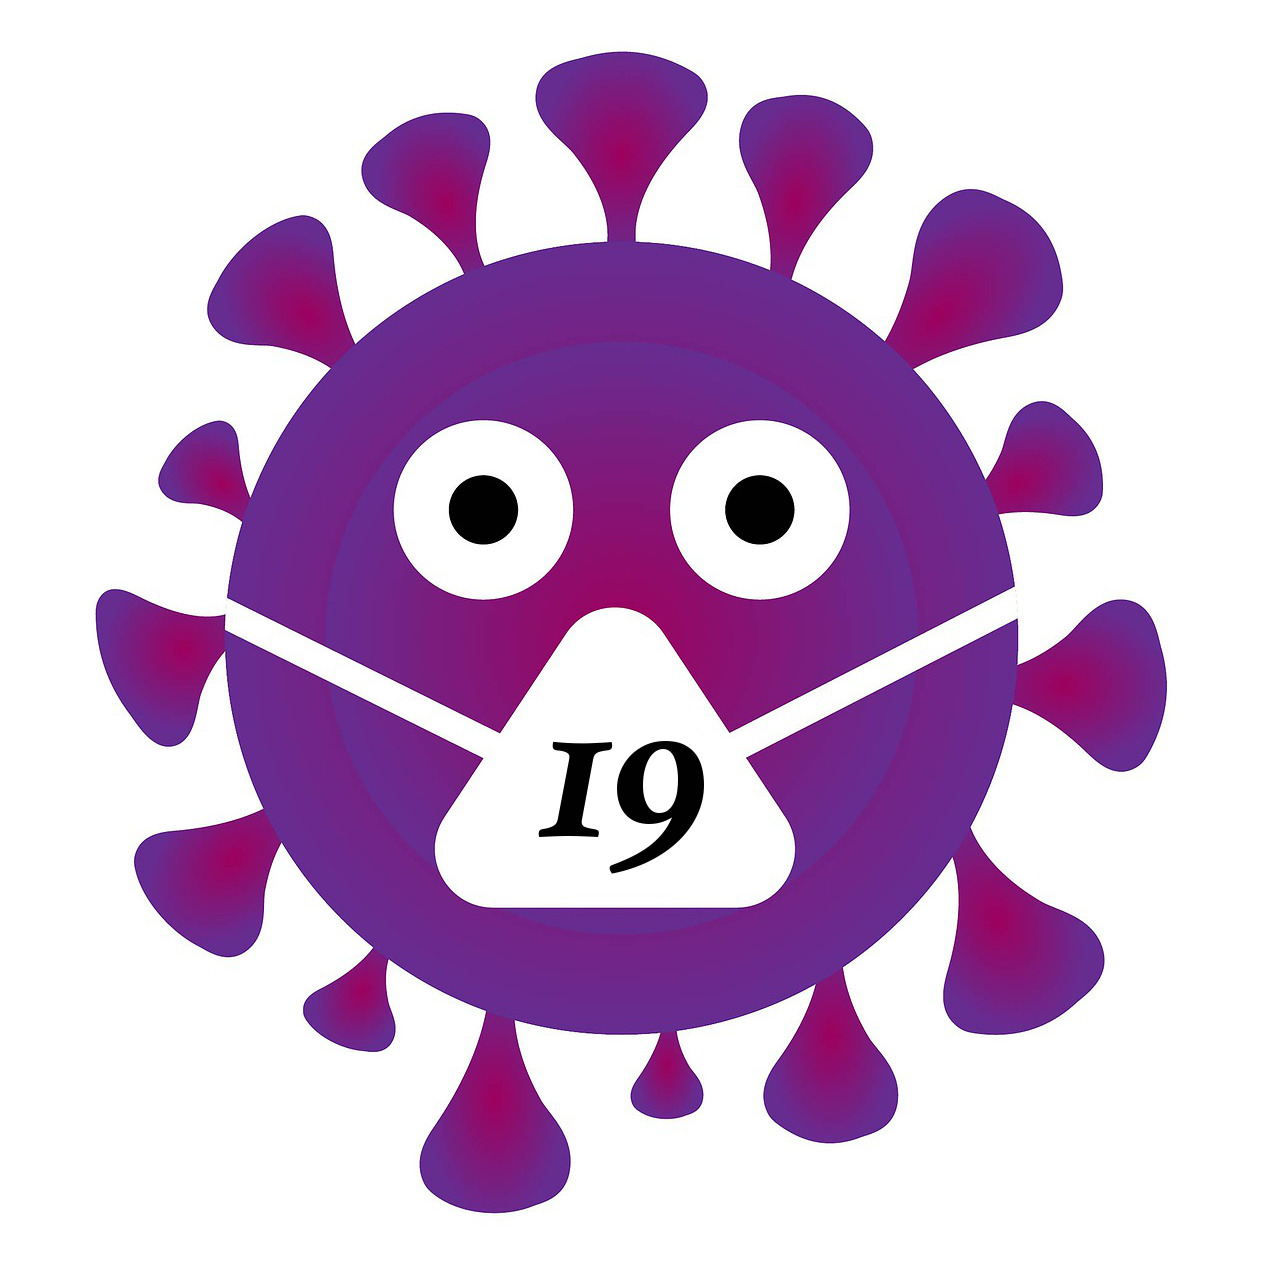 Covid Cabana: Top 5 Ways to Have Fun Despite the Coronavirus